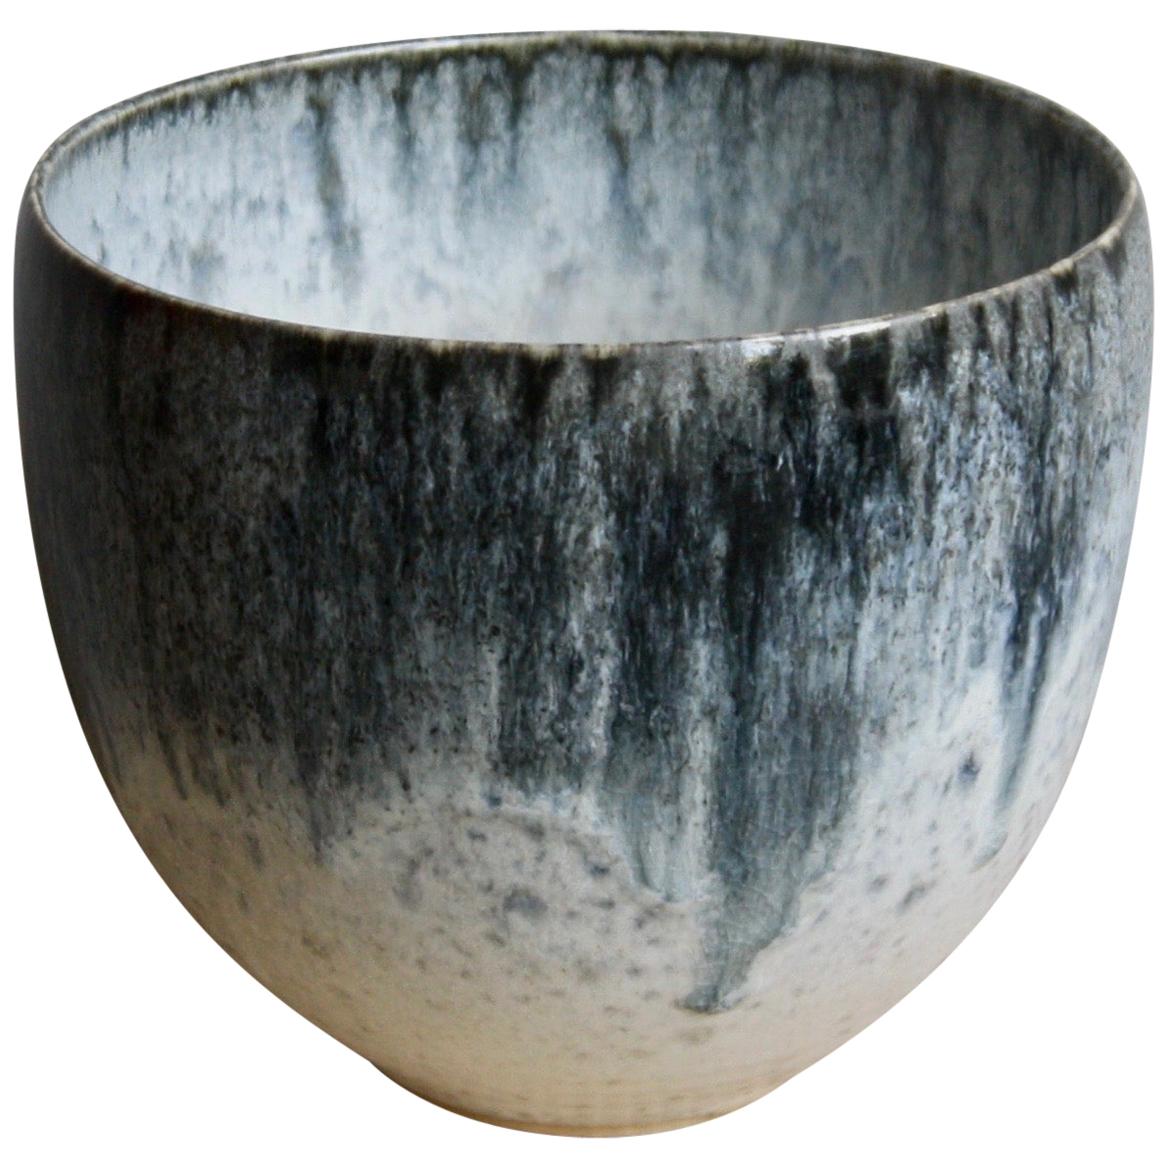 Kasper Würtz One off Stoneware Plant Pot Vase Blue and White Glaze